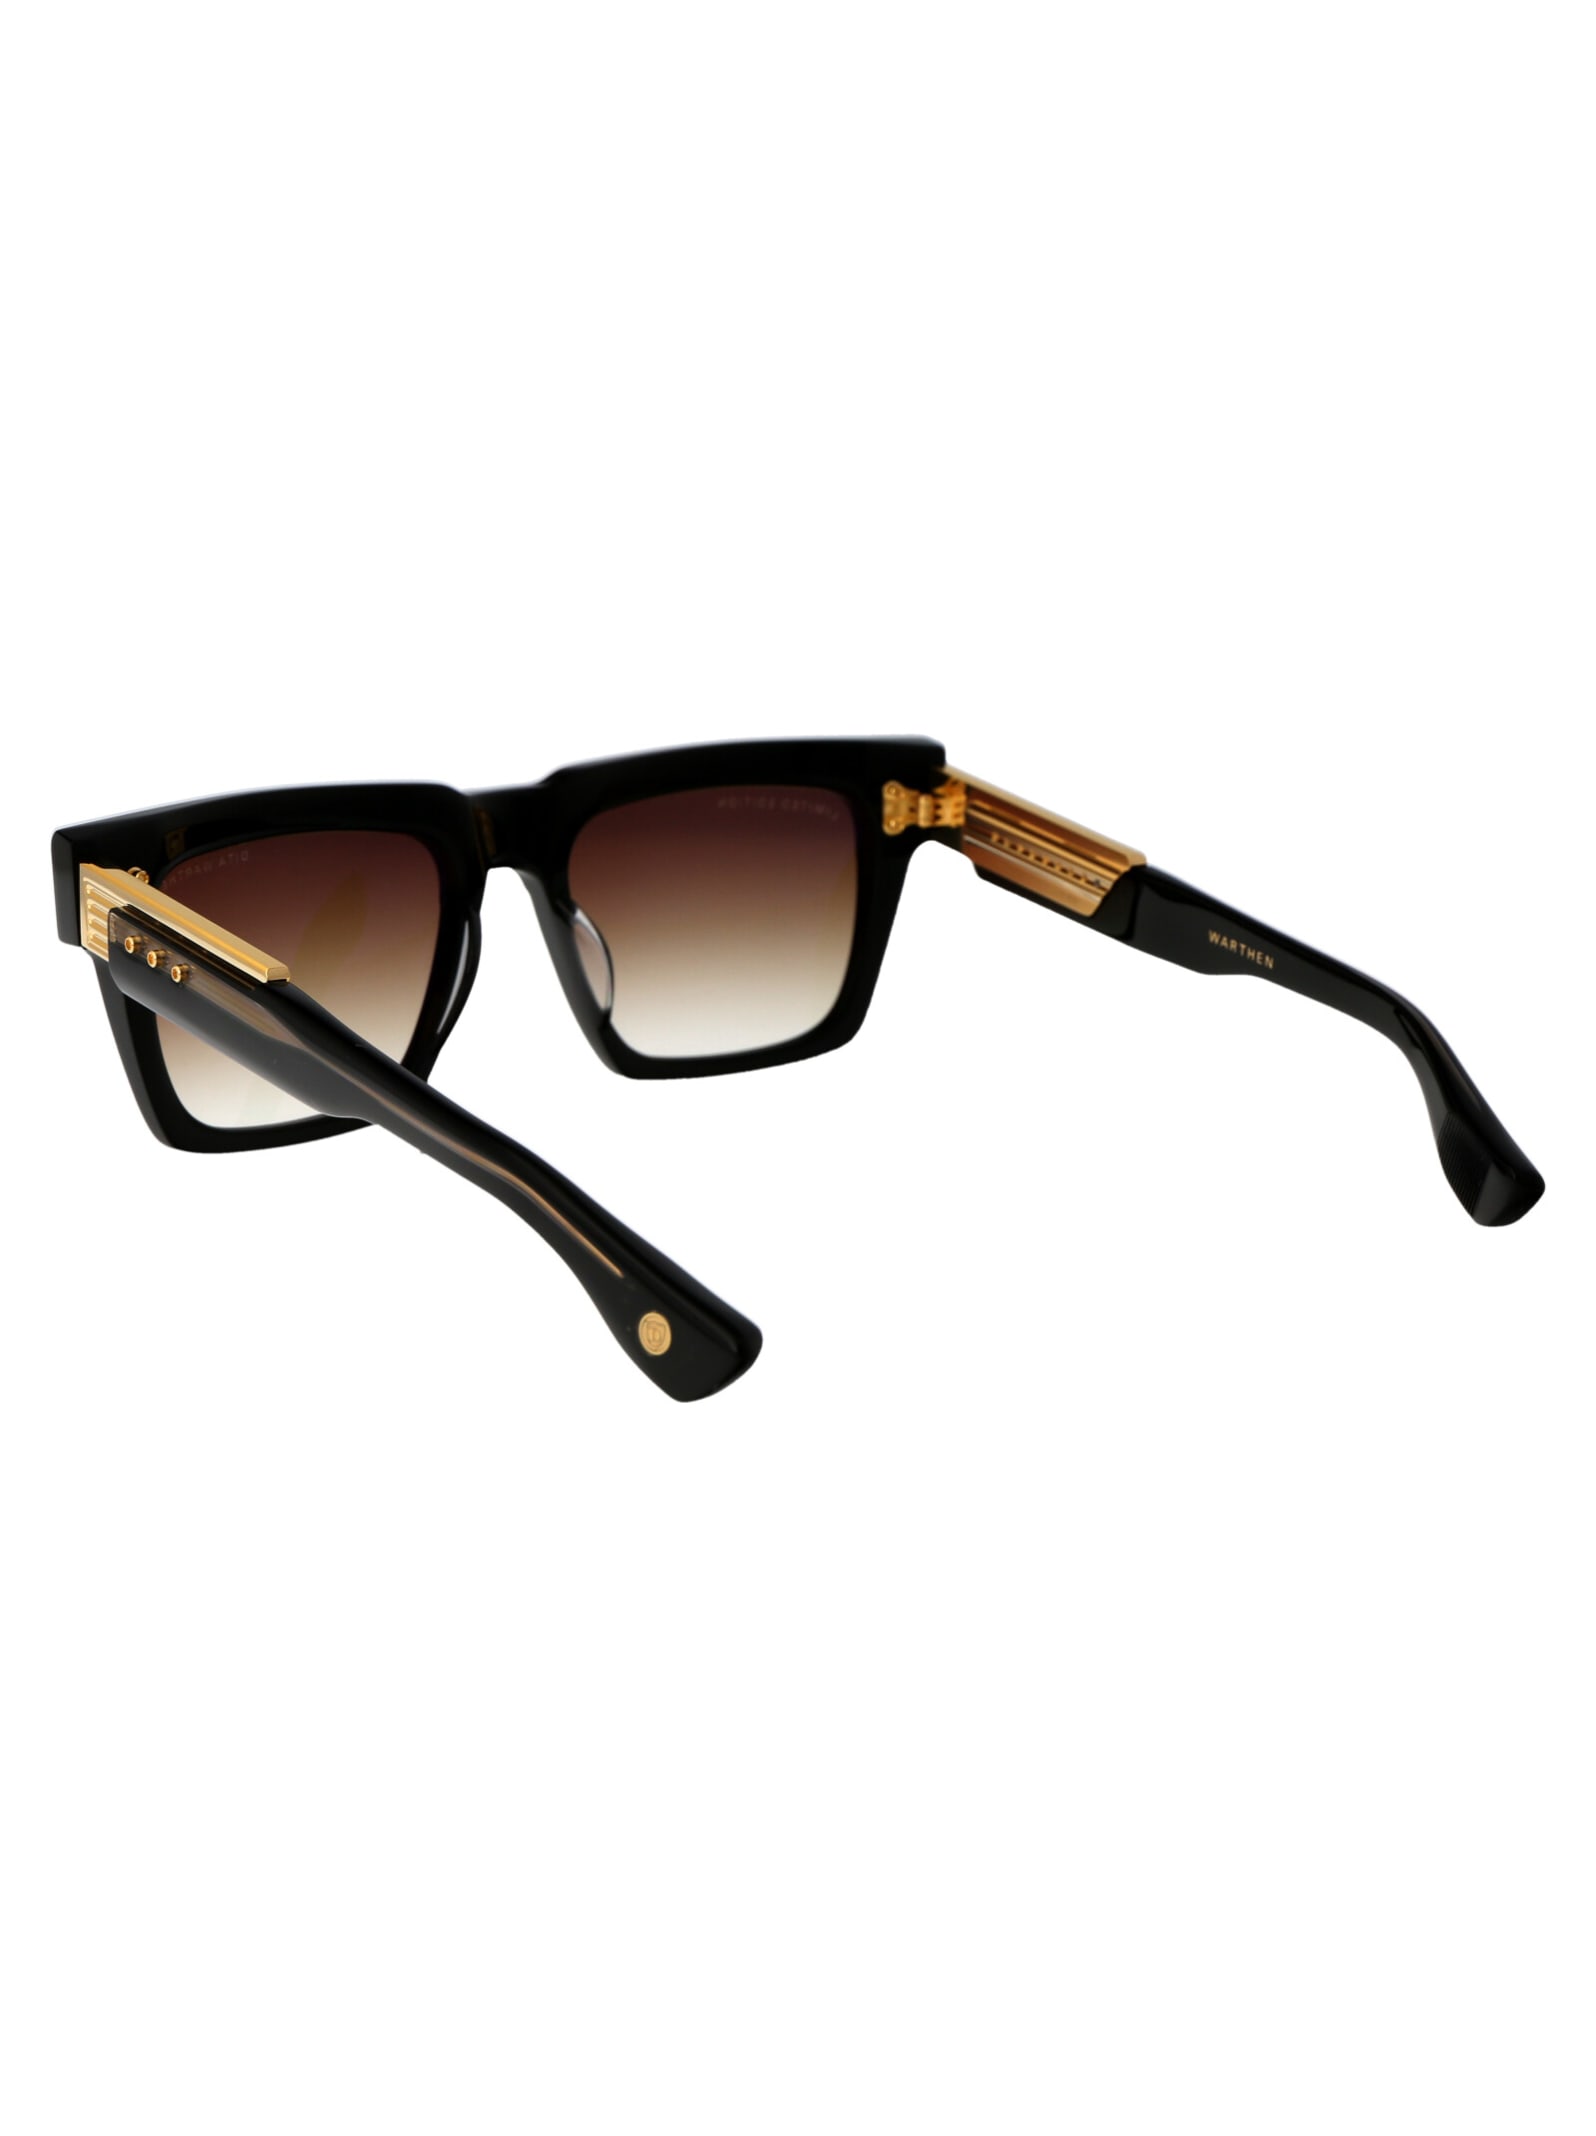 Shop Dita Warthen Sunglasses In 01 Black - Yellow Gold W/ Dark Brown To Clear Gradient